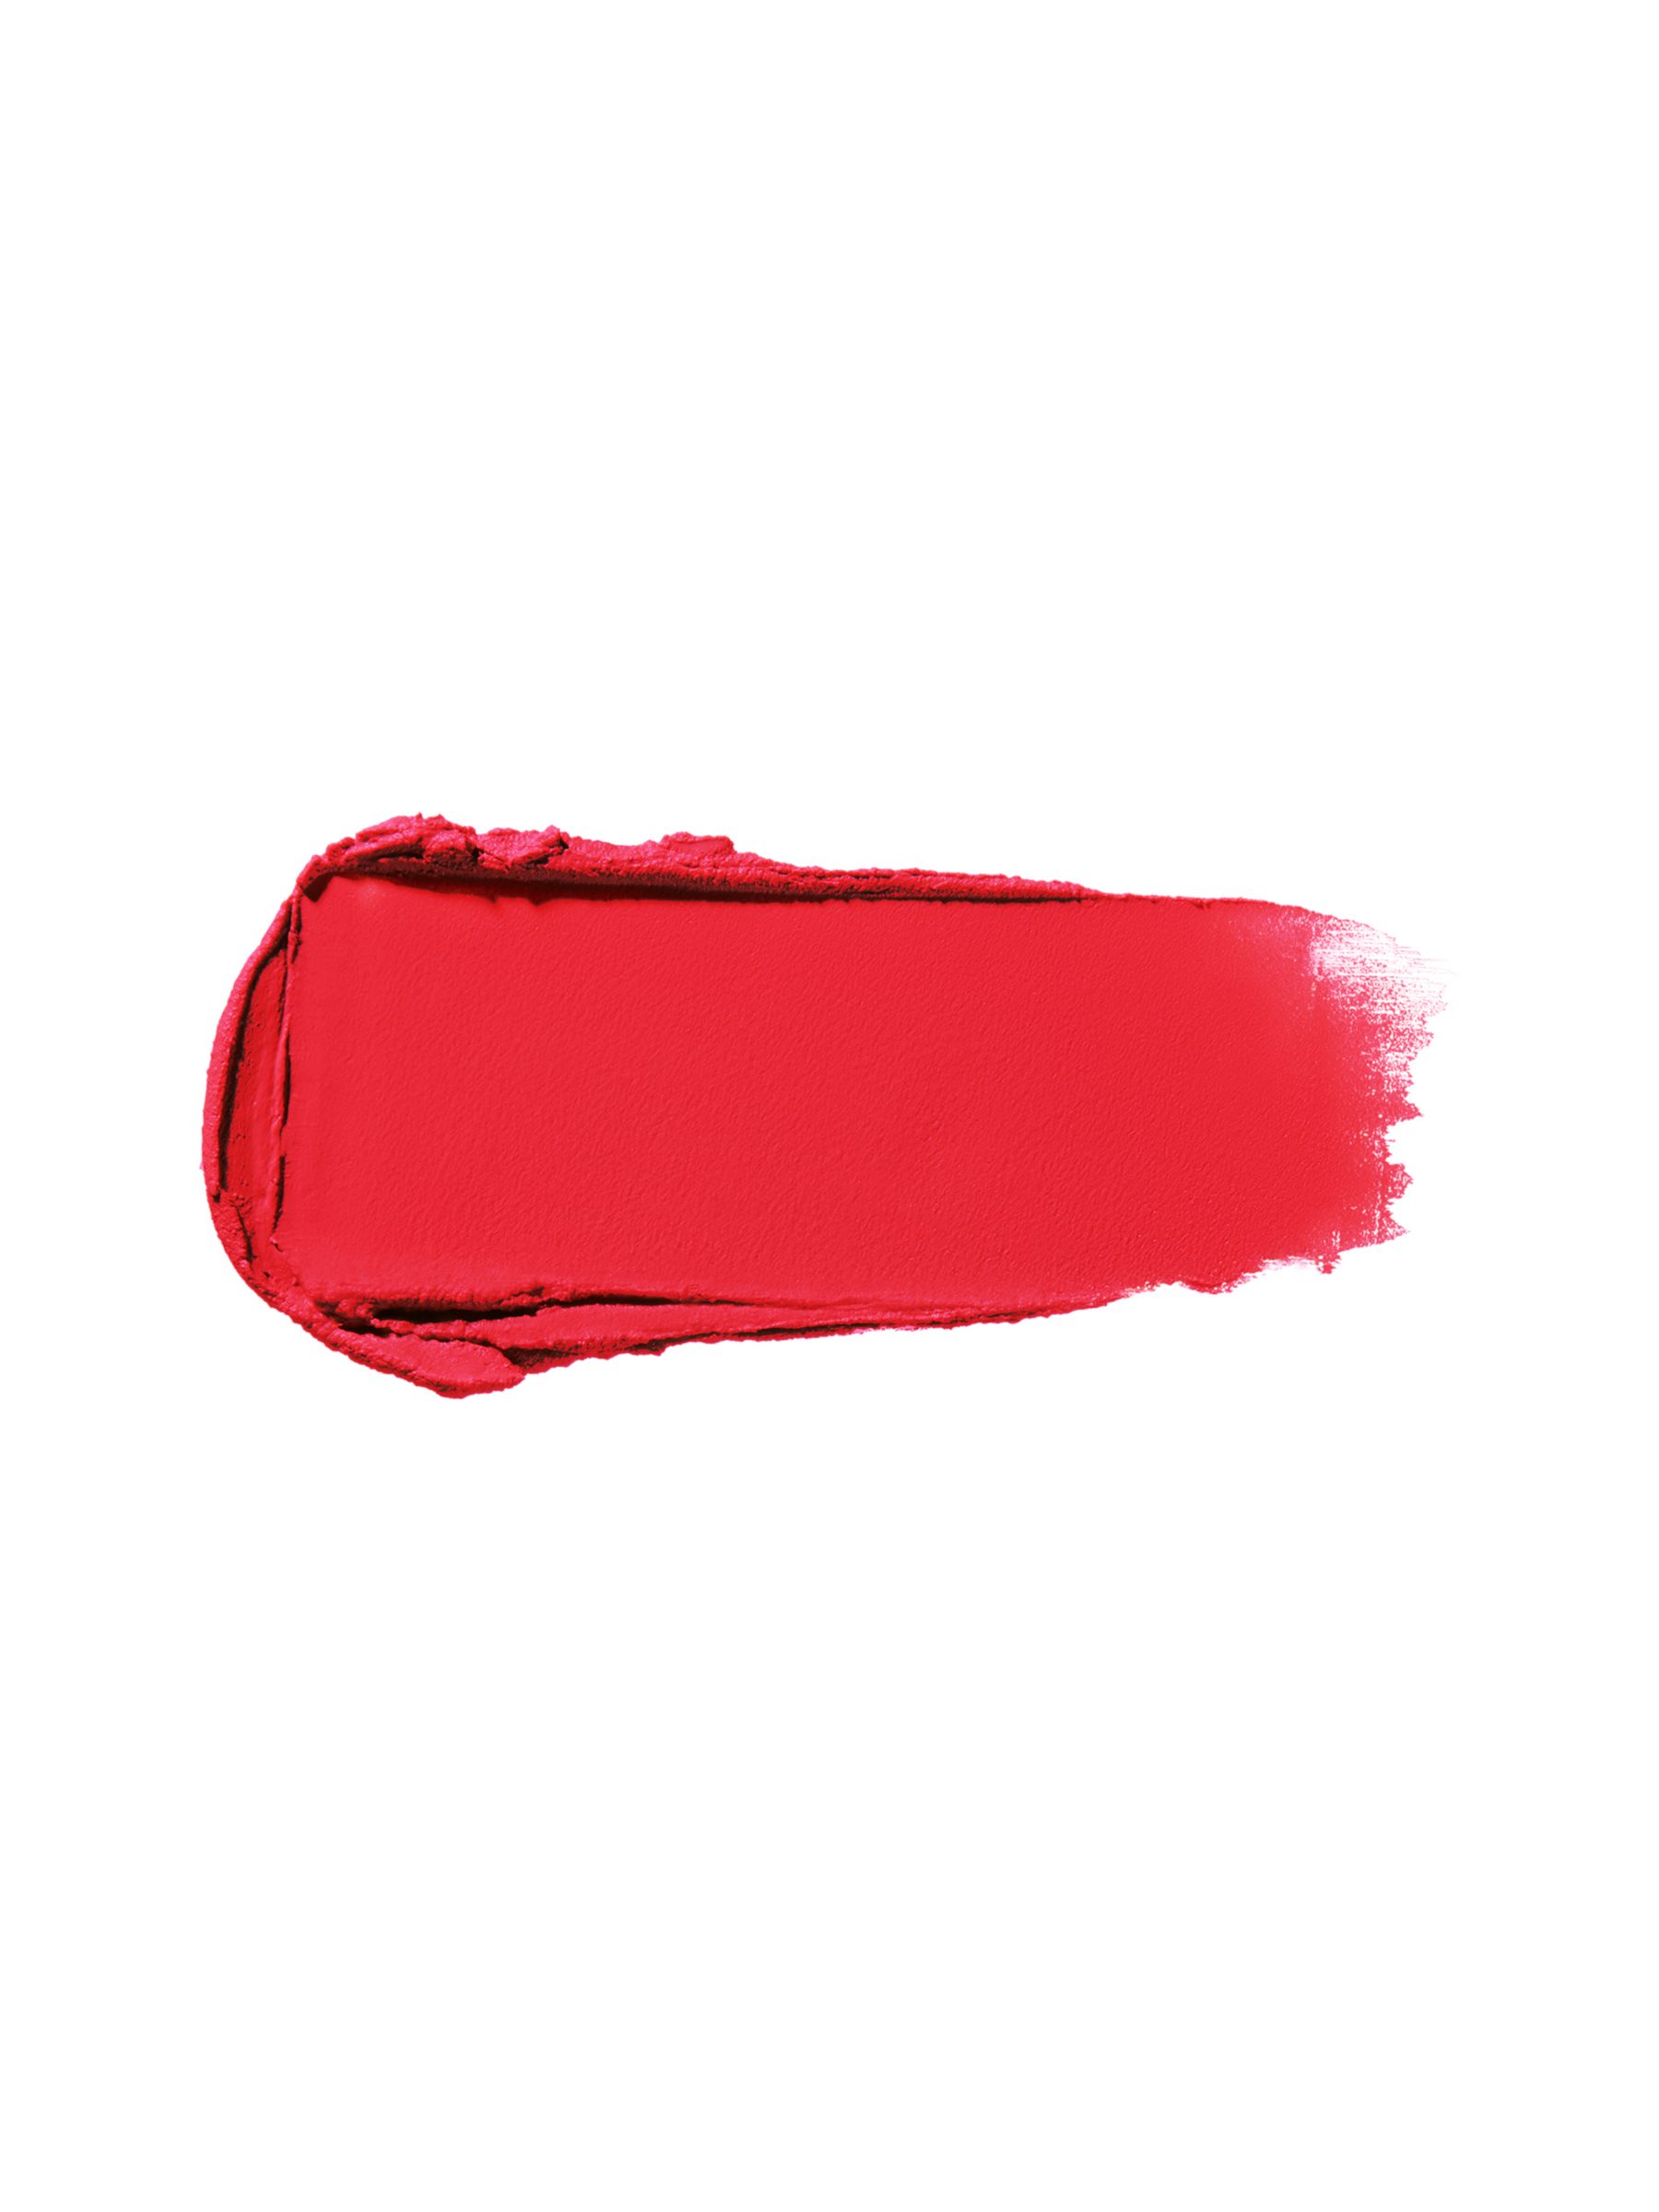 Shiseido Modern Matte Powder Lipstick, Shock Wave 513 2